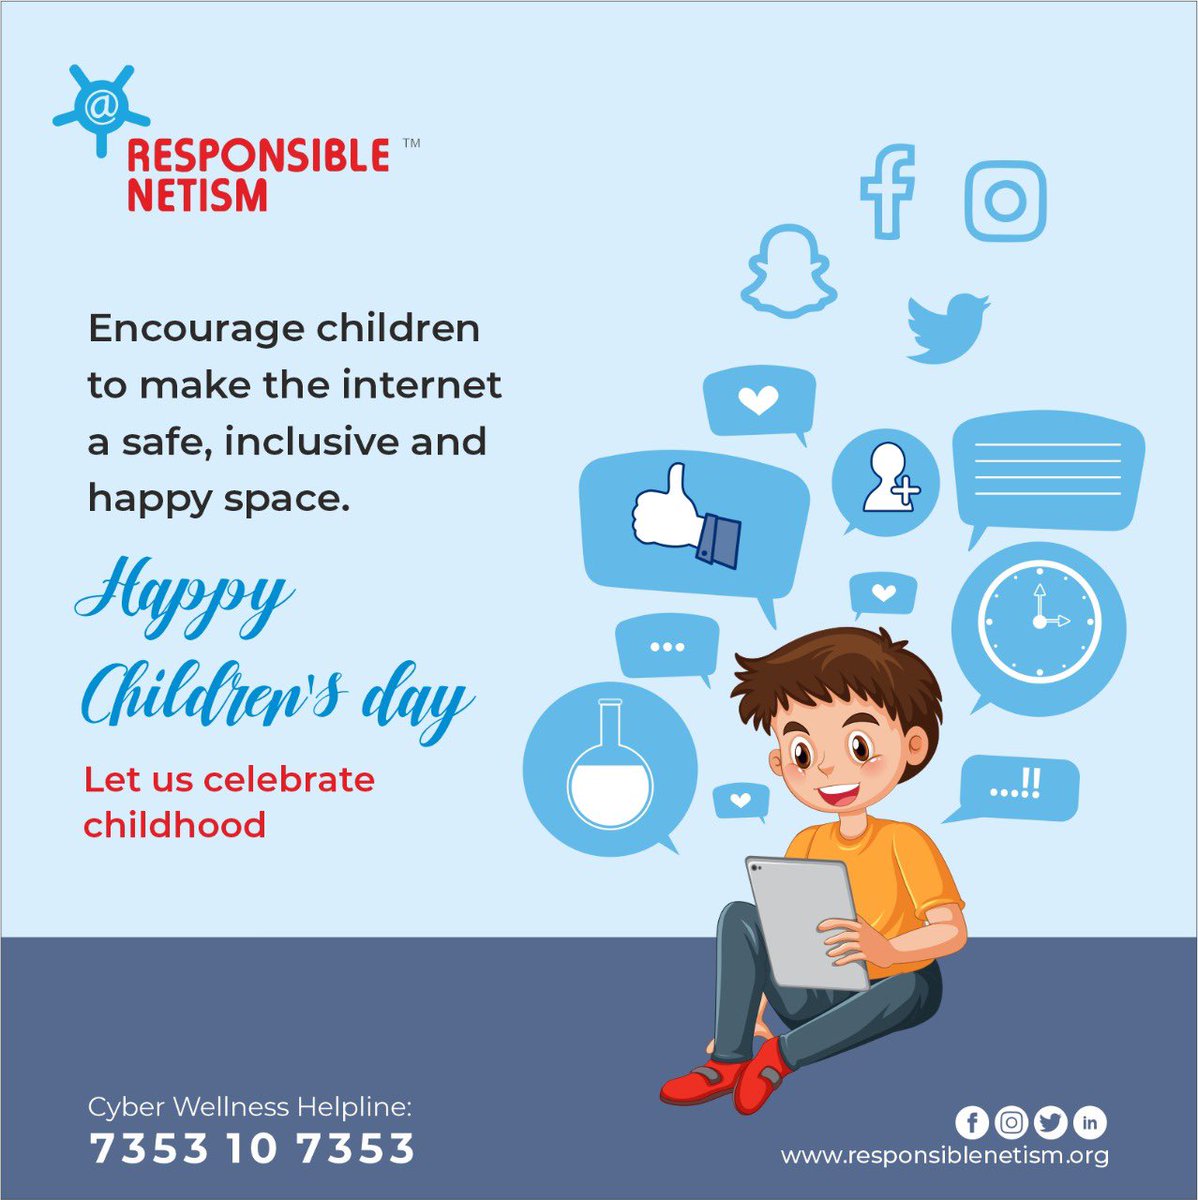 Celebrating childhood this Children's Day ! #HappyChildrensDay #ResponsibleNetism #Childonlineprotection #Cyberwellness